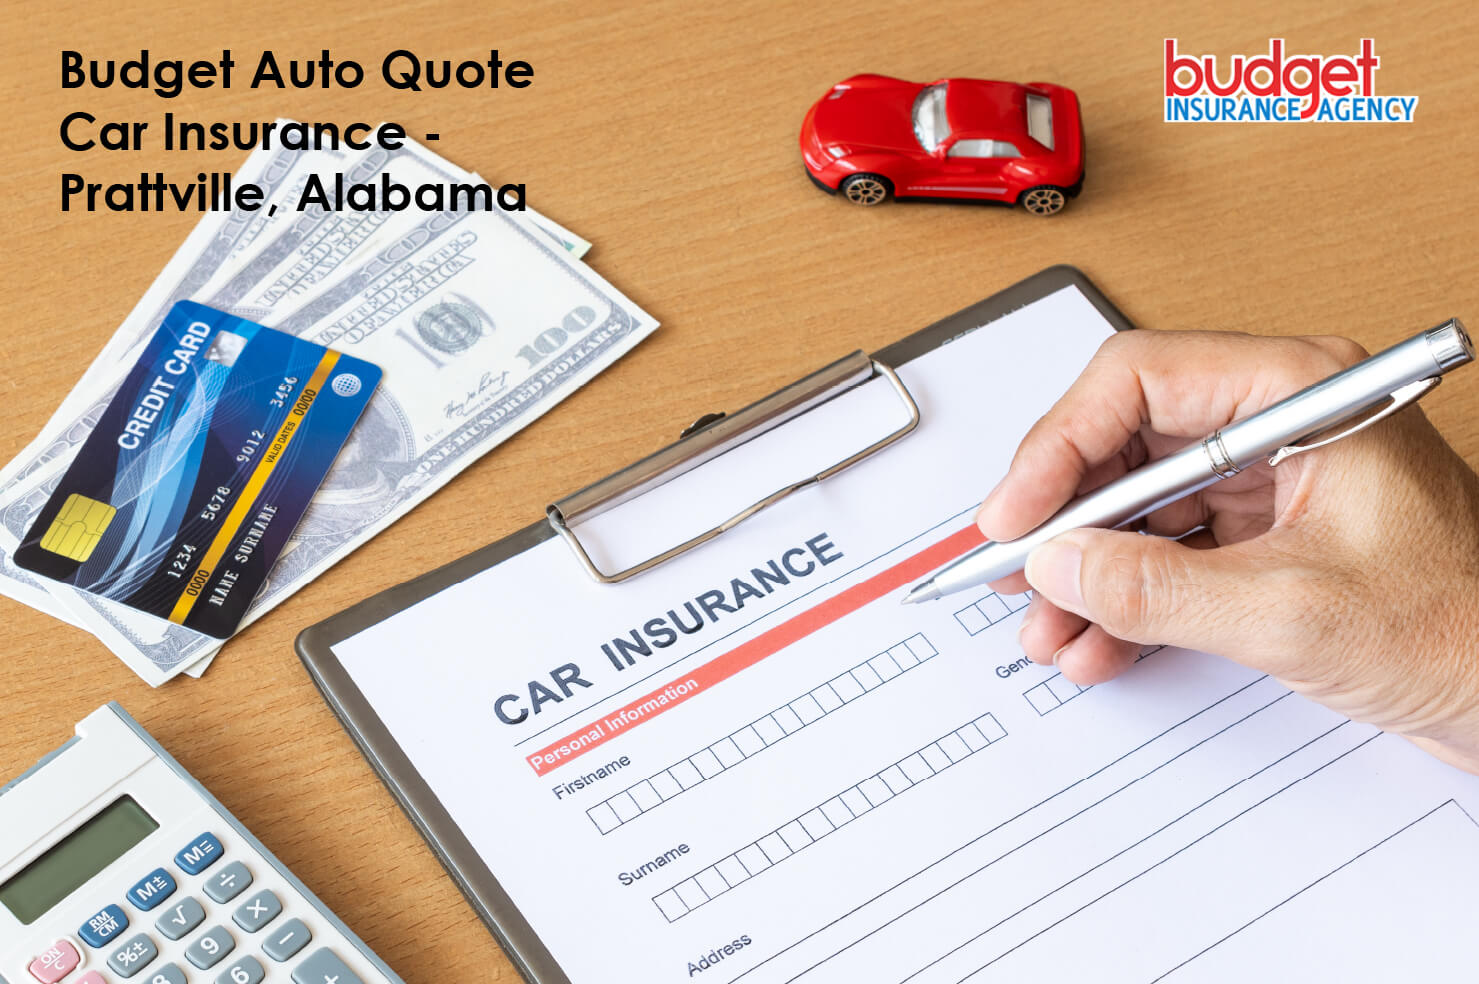 Budget Auto Quote Car Insurance - Prattville, Alabama